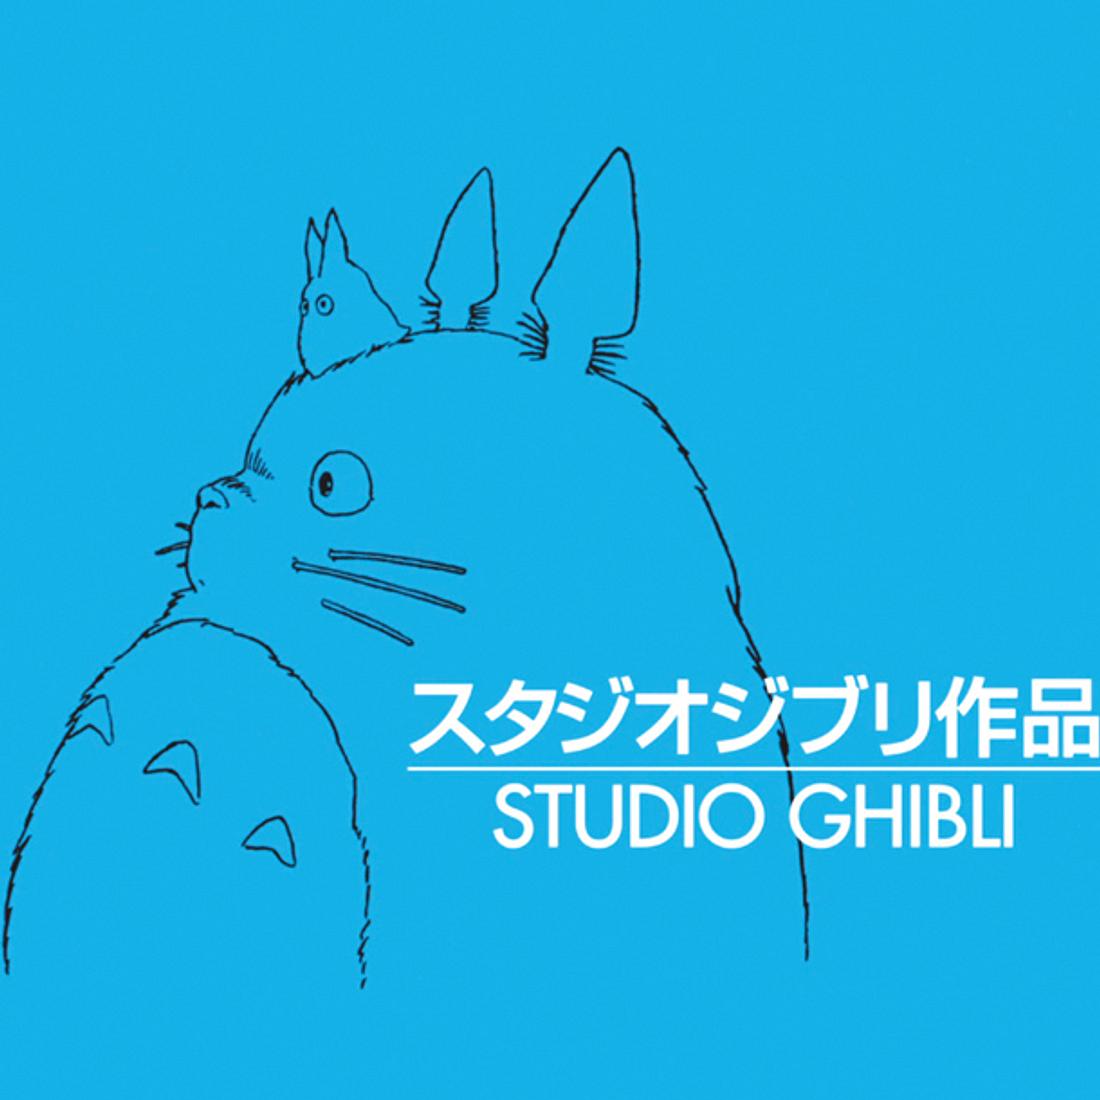 Die besten Animefilme kommen Studio Ghibli